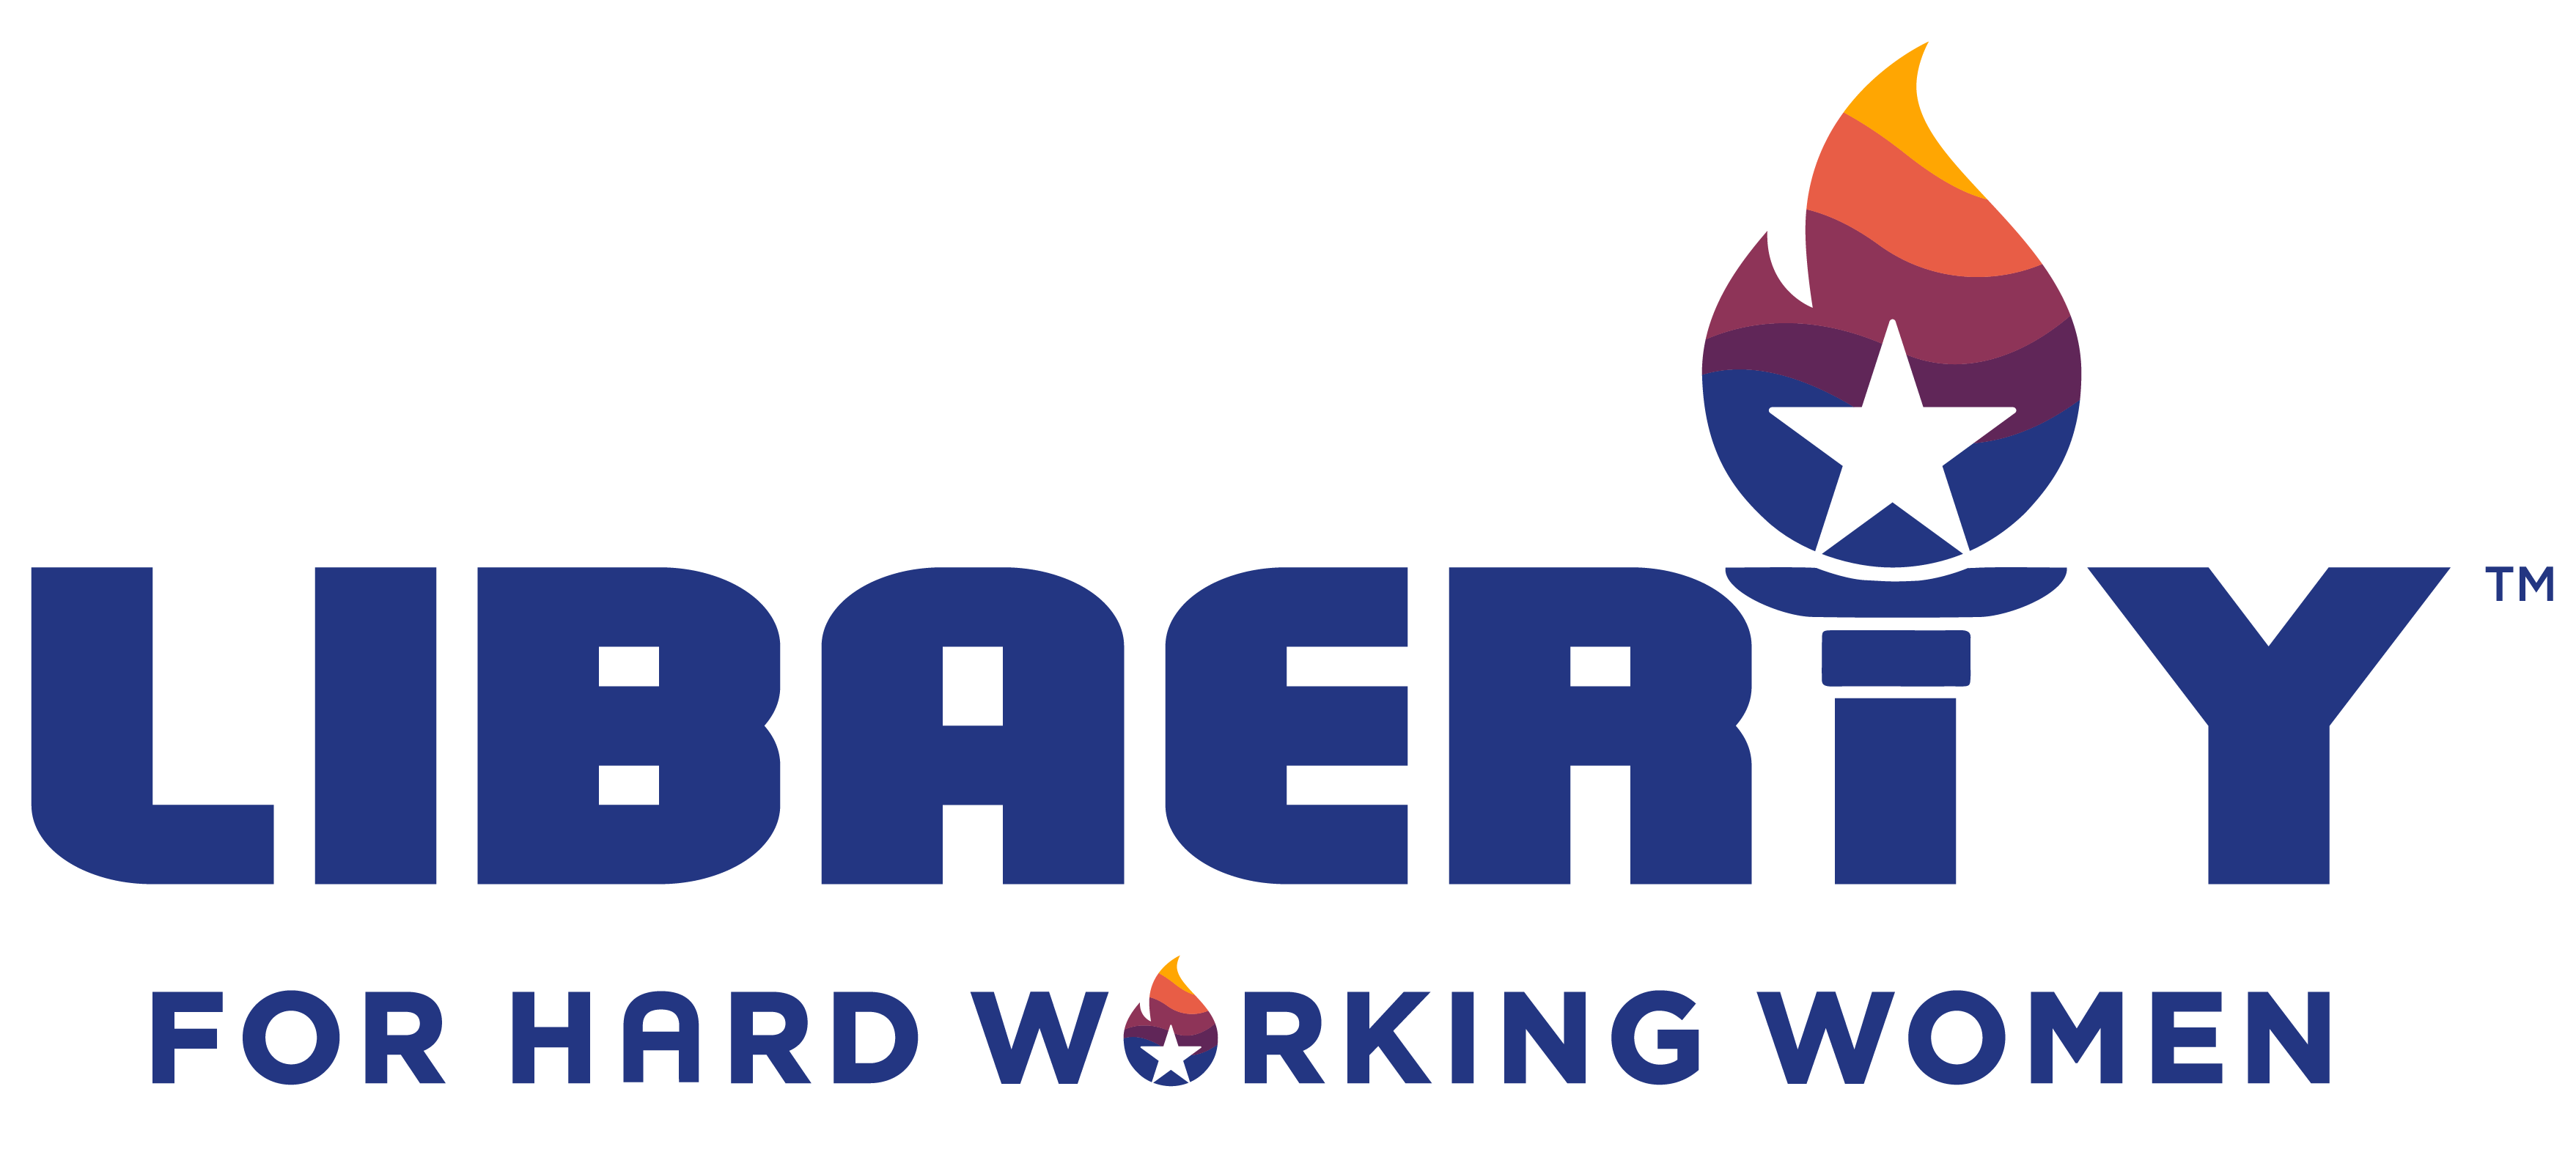 Libaerty logo